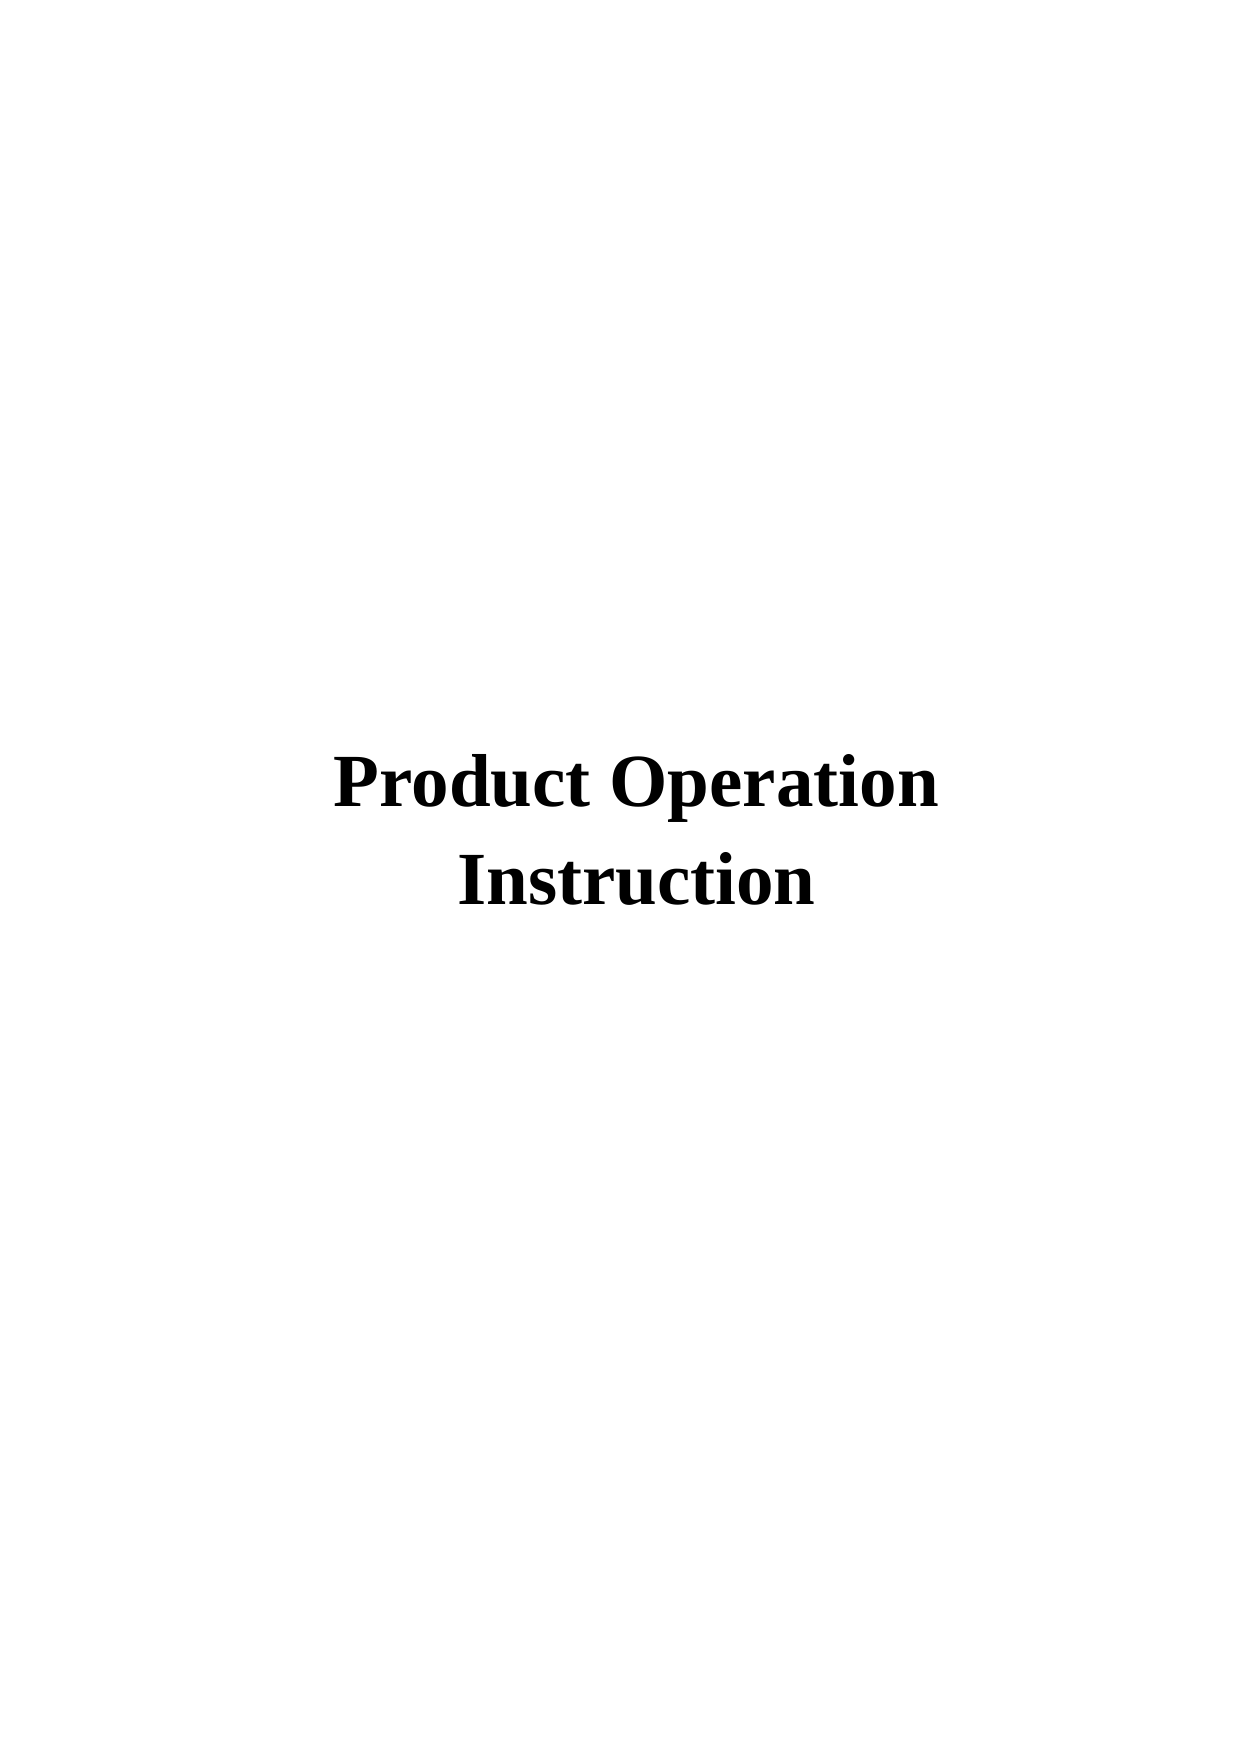                      Product Operation Instruction     